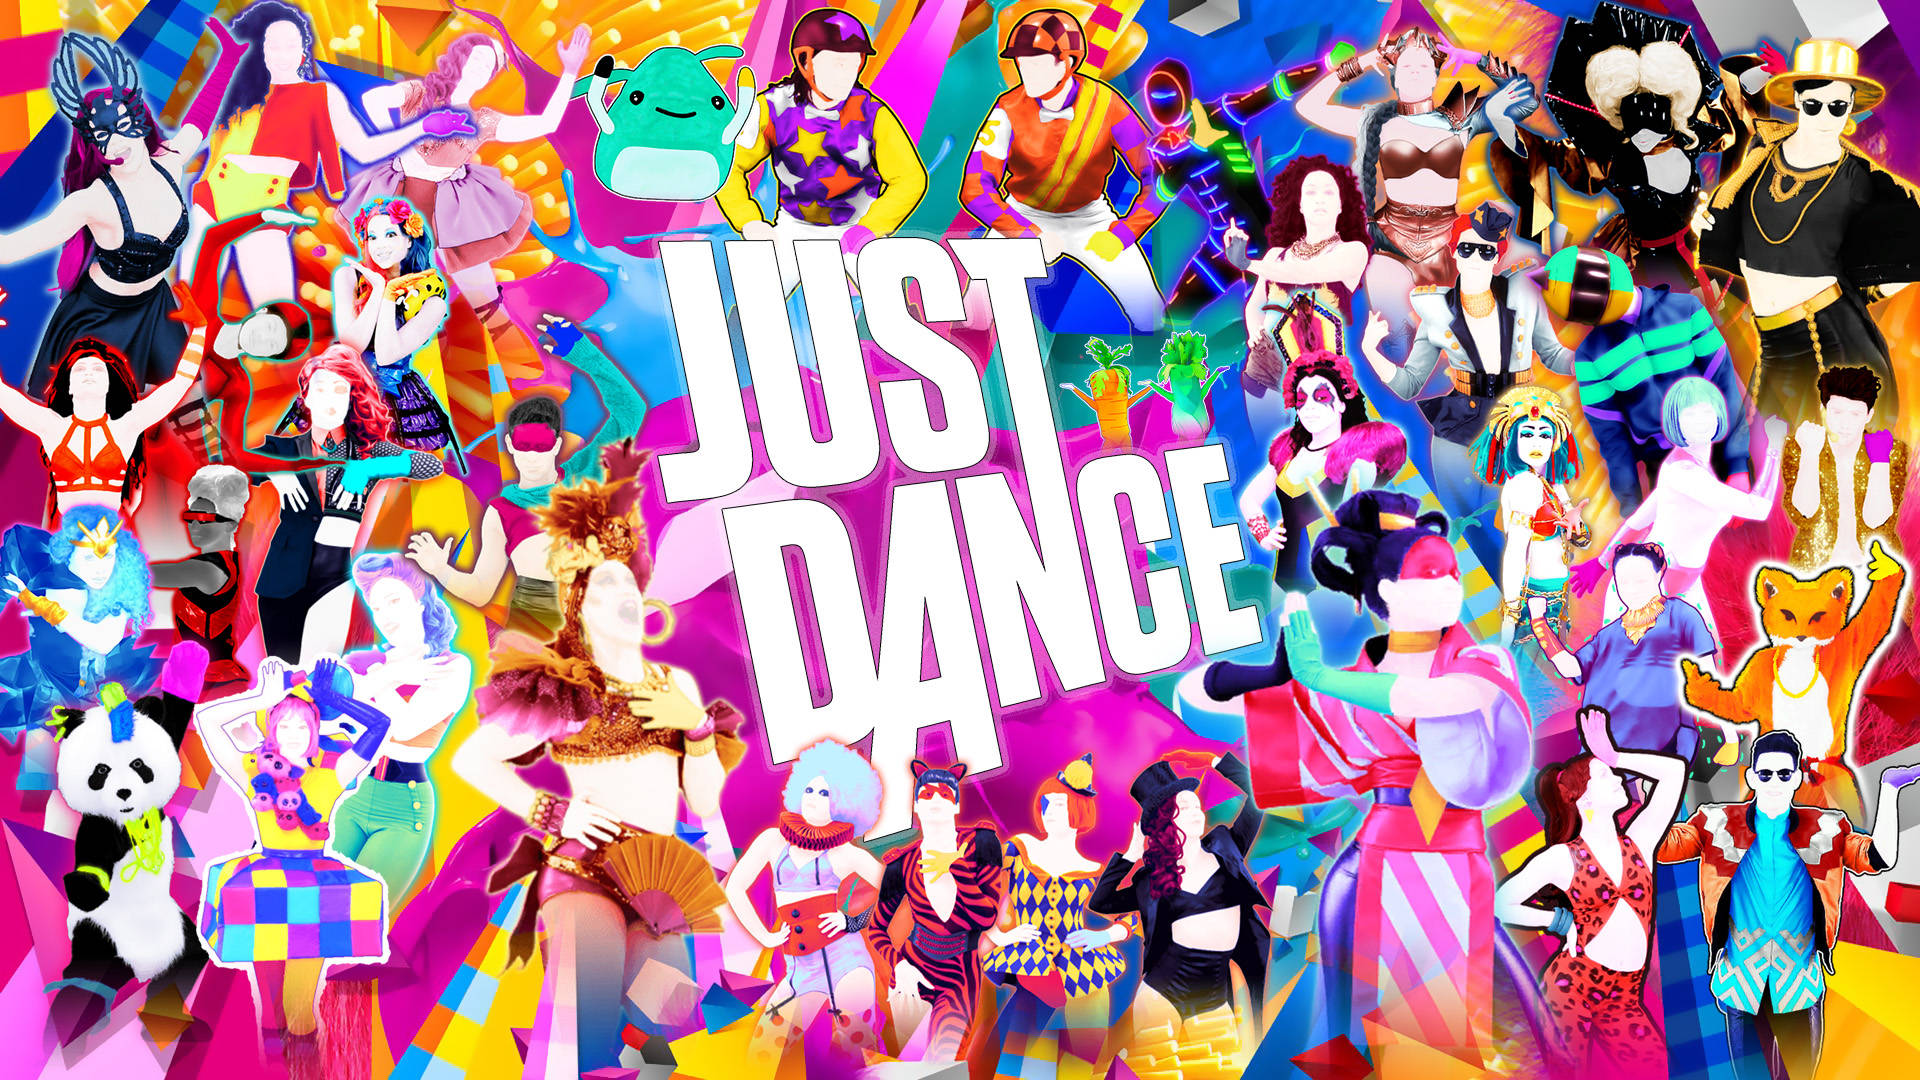 Just Dance Video Game Wallpaper